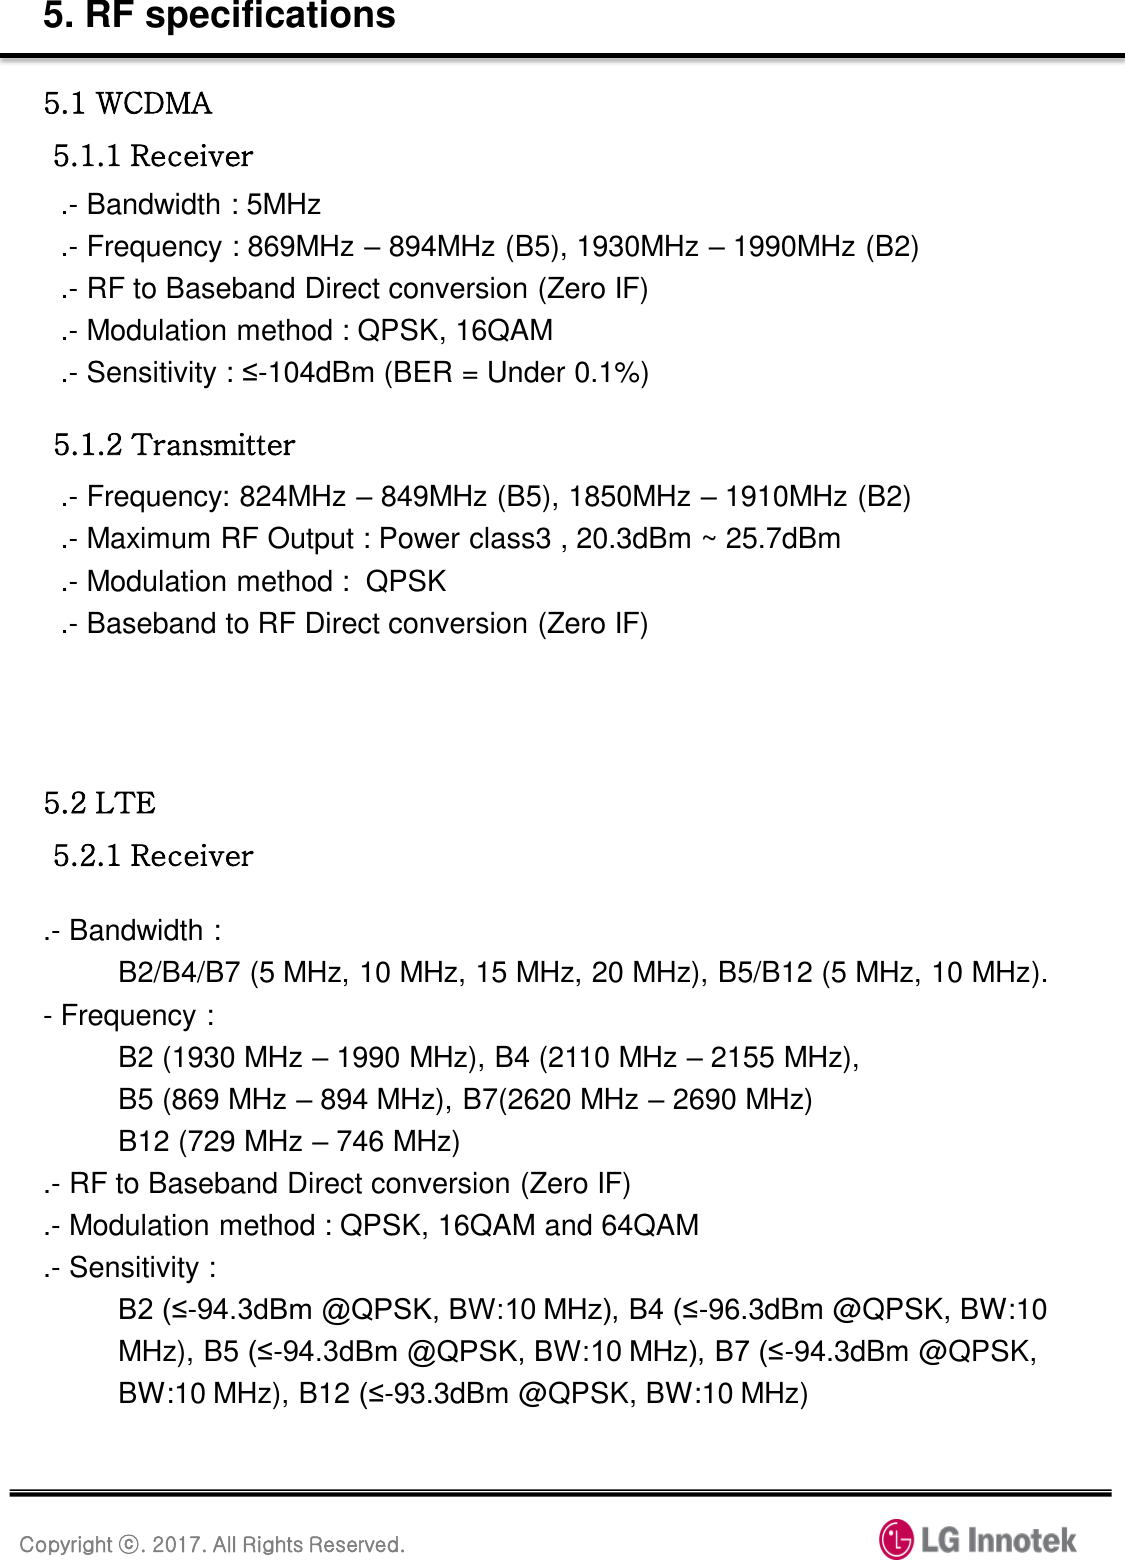 Copyright ⓒ. 2017. All Rights Reserved. 5. RF specifications 5.1 WCDMA  5.1.1 Receiver .- Bandwidth : 5MHz .- Frequency : 869MHz – 894MHz (B5), 1930MHz – 1990MHz (B2) .- RF to Baseband Direct conversion (Zero IF) .- Modulation method : QPSK, 16QAM .- Sensitivity : ≤-104dBm (BER = Under 0.1%) 5.1.2 Transmitter .- Frequency: 824MHz – 849MHz (B5), 1850MHz – 1910MHz (B2) .- Maximum RF Output : Power class3 , 20.3dBm ~ 25.7dBm                                    .- Modulation method :  QPSK .- Baseband to RF Direct conversion (Zero IF) 5.2 LTE  5.2.1 Receiver .- Bandwidth :  B2/B4/B7 (5 MHz, 10 MHz, 15 MHz, 20 MHz), B5/B12 (5 MHz, 10 MHz). - Frequency :  B2 (1930 MHz – 1990 MHz), B4 (2110 MHz – 2155 MHz),  B5 (869 MHz – 894 MHz), B7(2620 MHz – 2690 MHz) B12 (729 MHz – 746 MHz) .- RF to Baseband Direct conversion (Zero IF) .- Modulation method : QPSK, 16QAM and 64QAM .- Sensitivity :  B2 (≤-94.3dBm @QPSK, BW:10 MHz), B4 (≤-96.3dBm @QPSK, BW:10 MHz), B5 (≤-94.3dBm @QPSK, BW:10 MHz), B7 (≤-94.3dBm @QPSK, BW:10 MHz), B12 (≤-93.3dBm @QPSK, BW:10 MHz) 